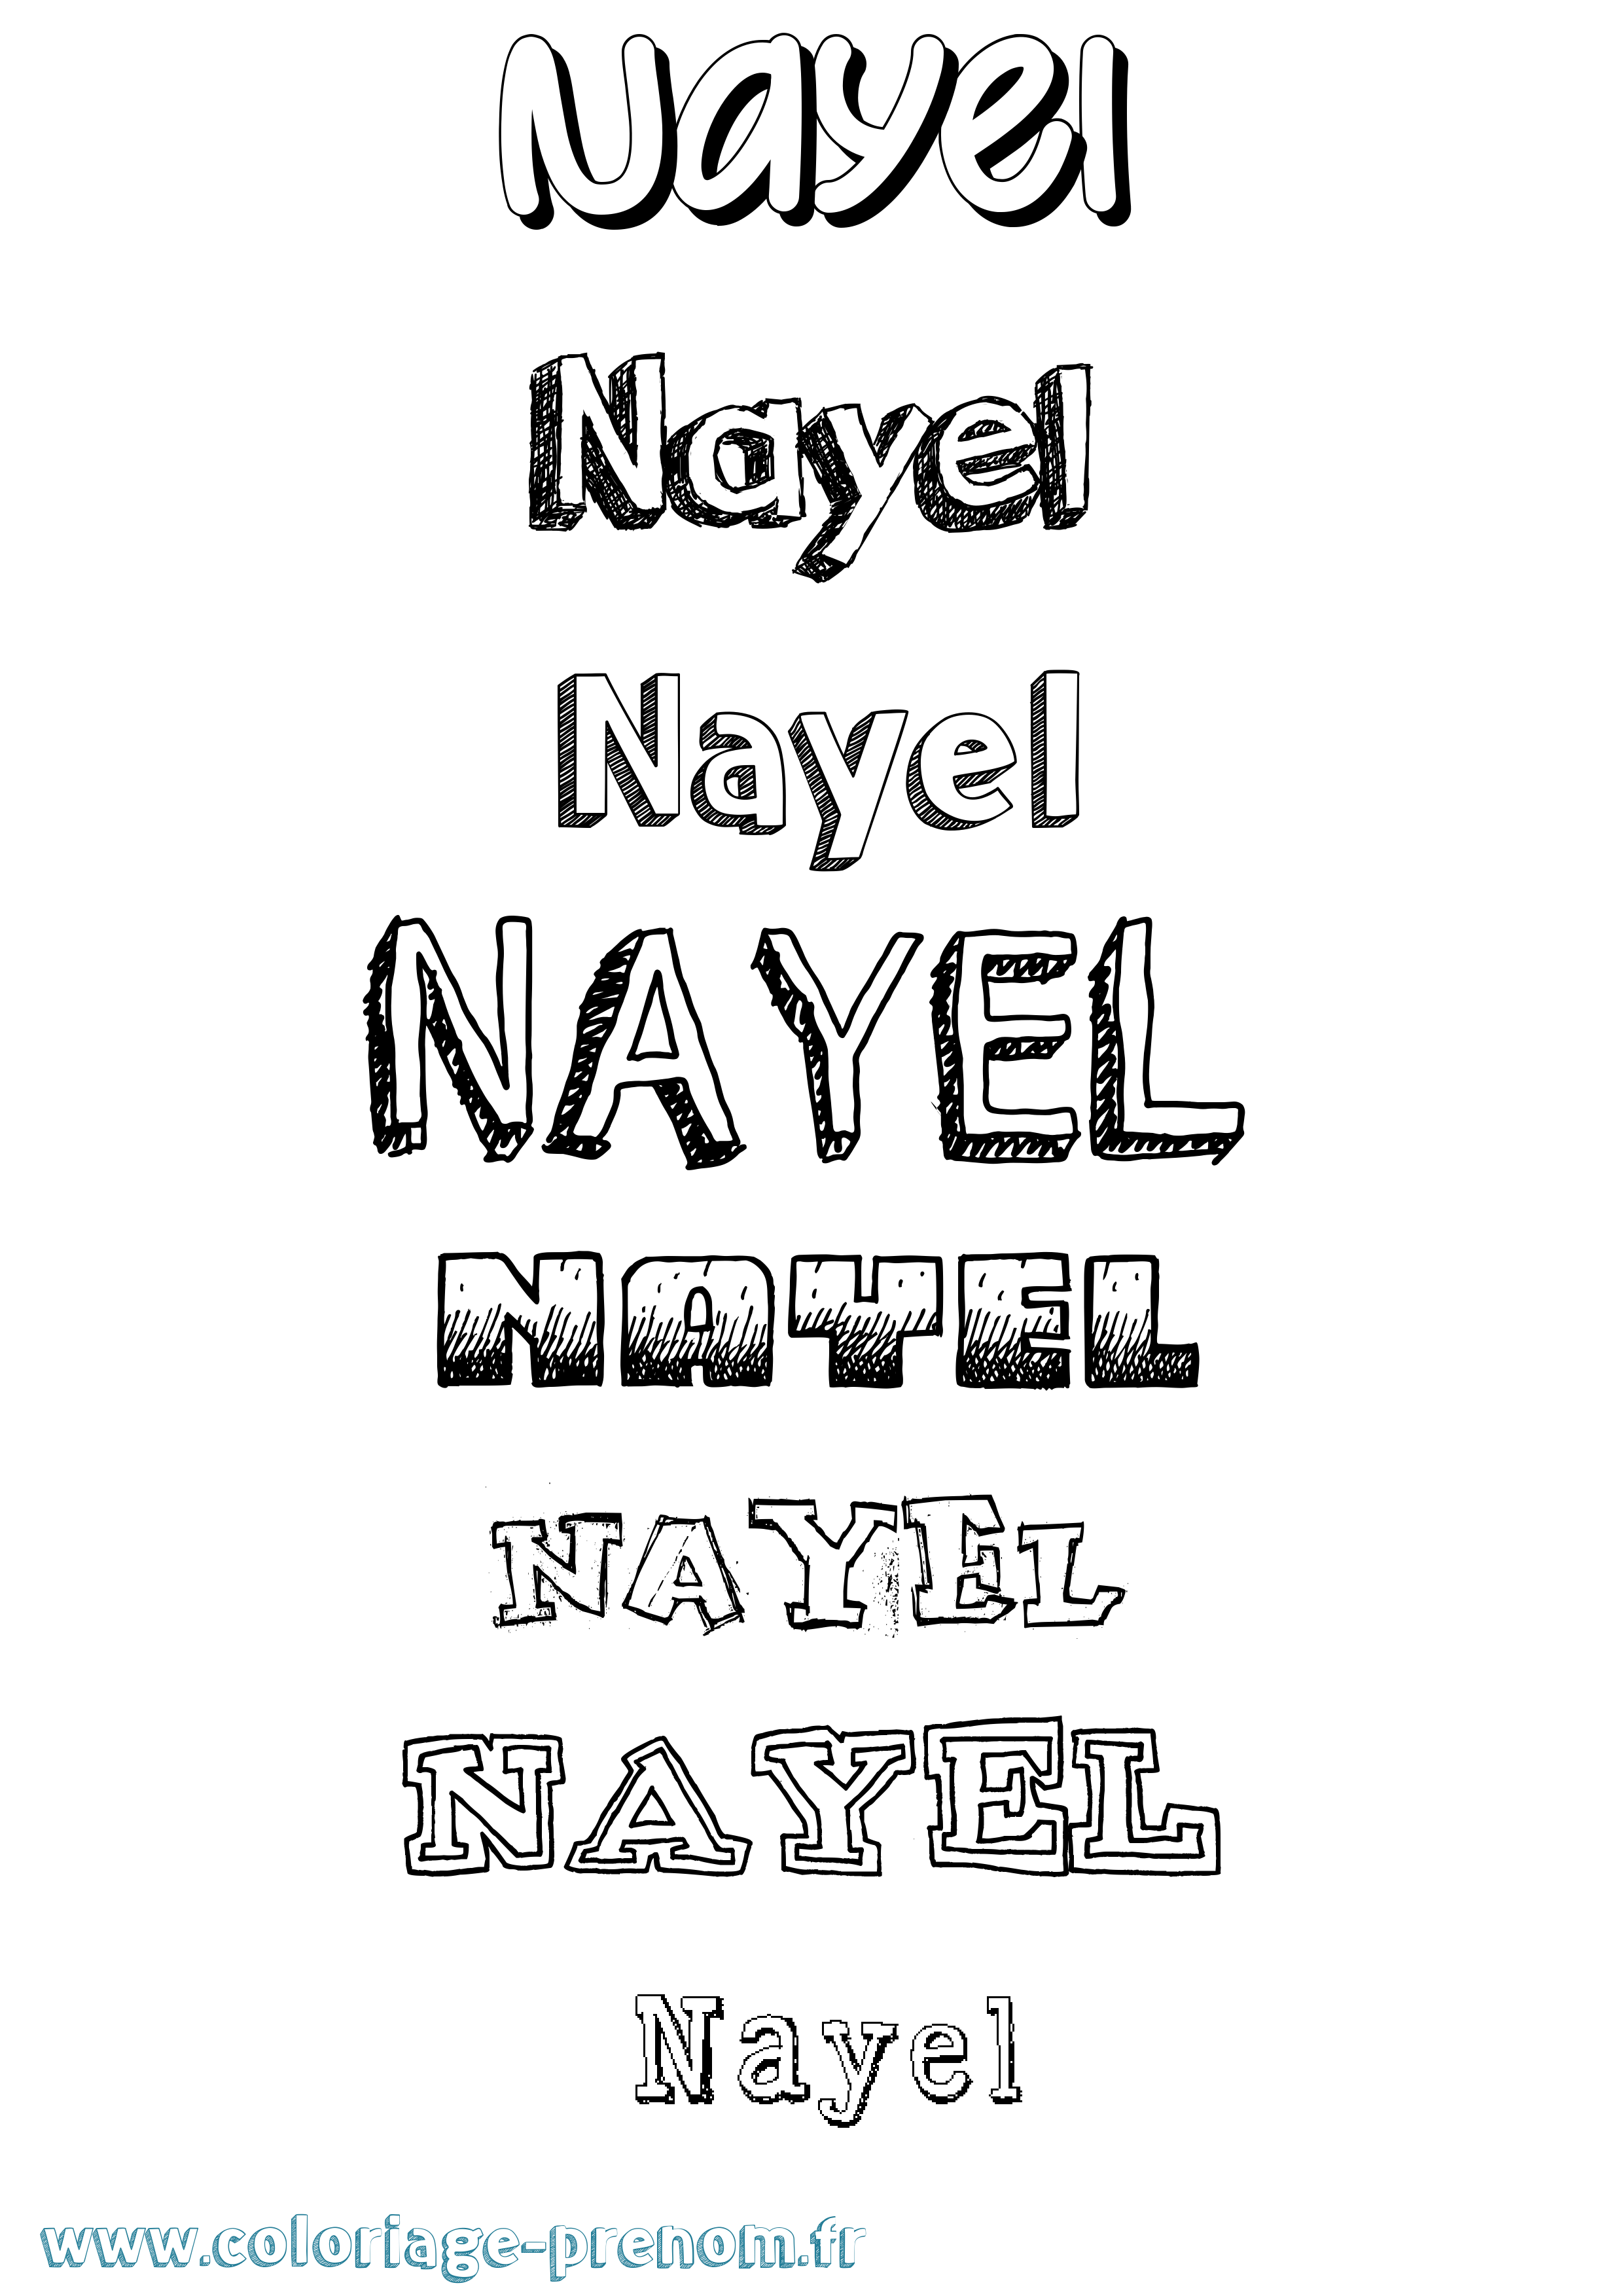 Coloriage prénom Nayel Dessiné